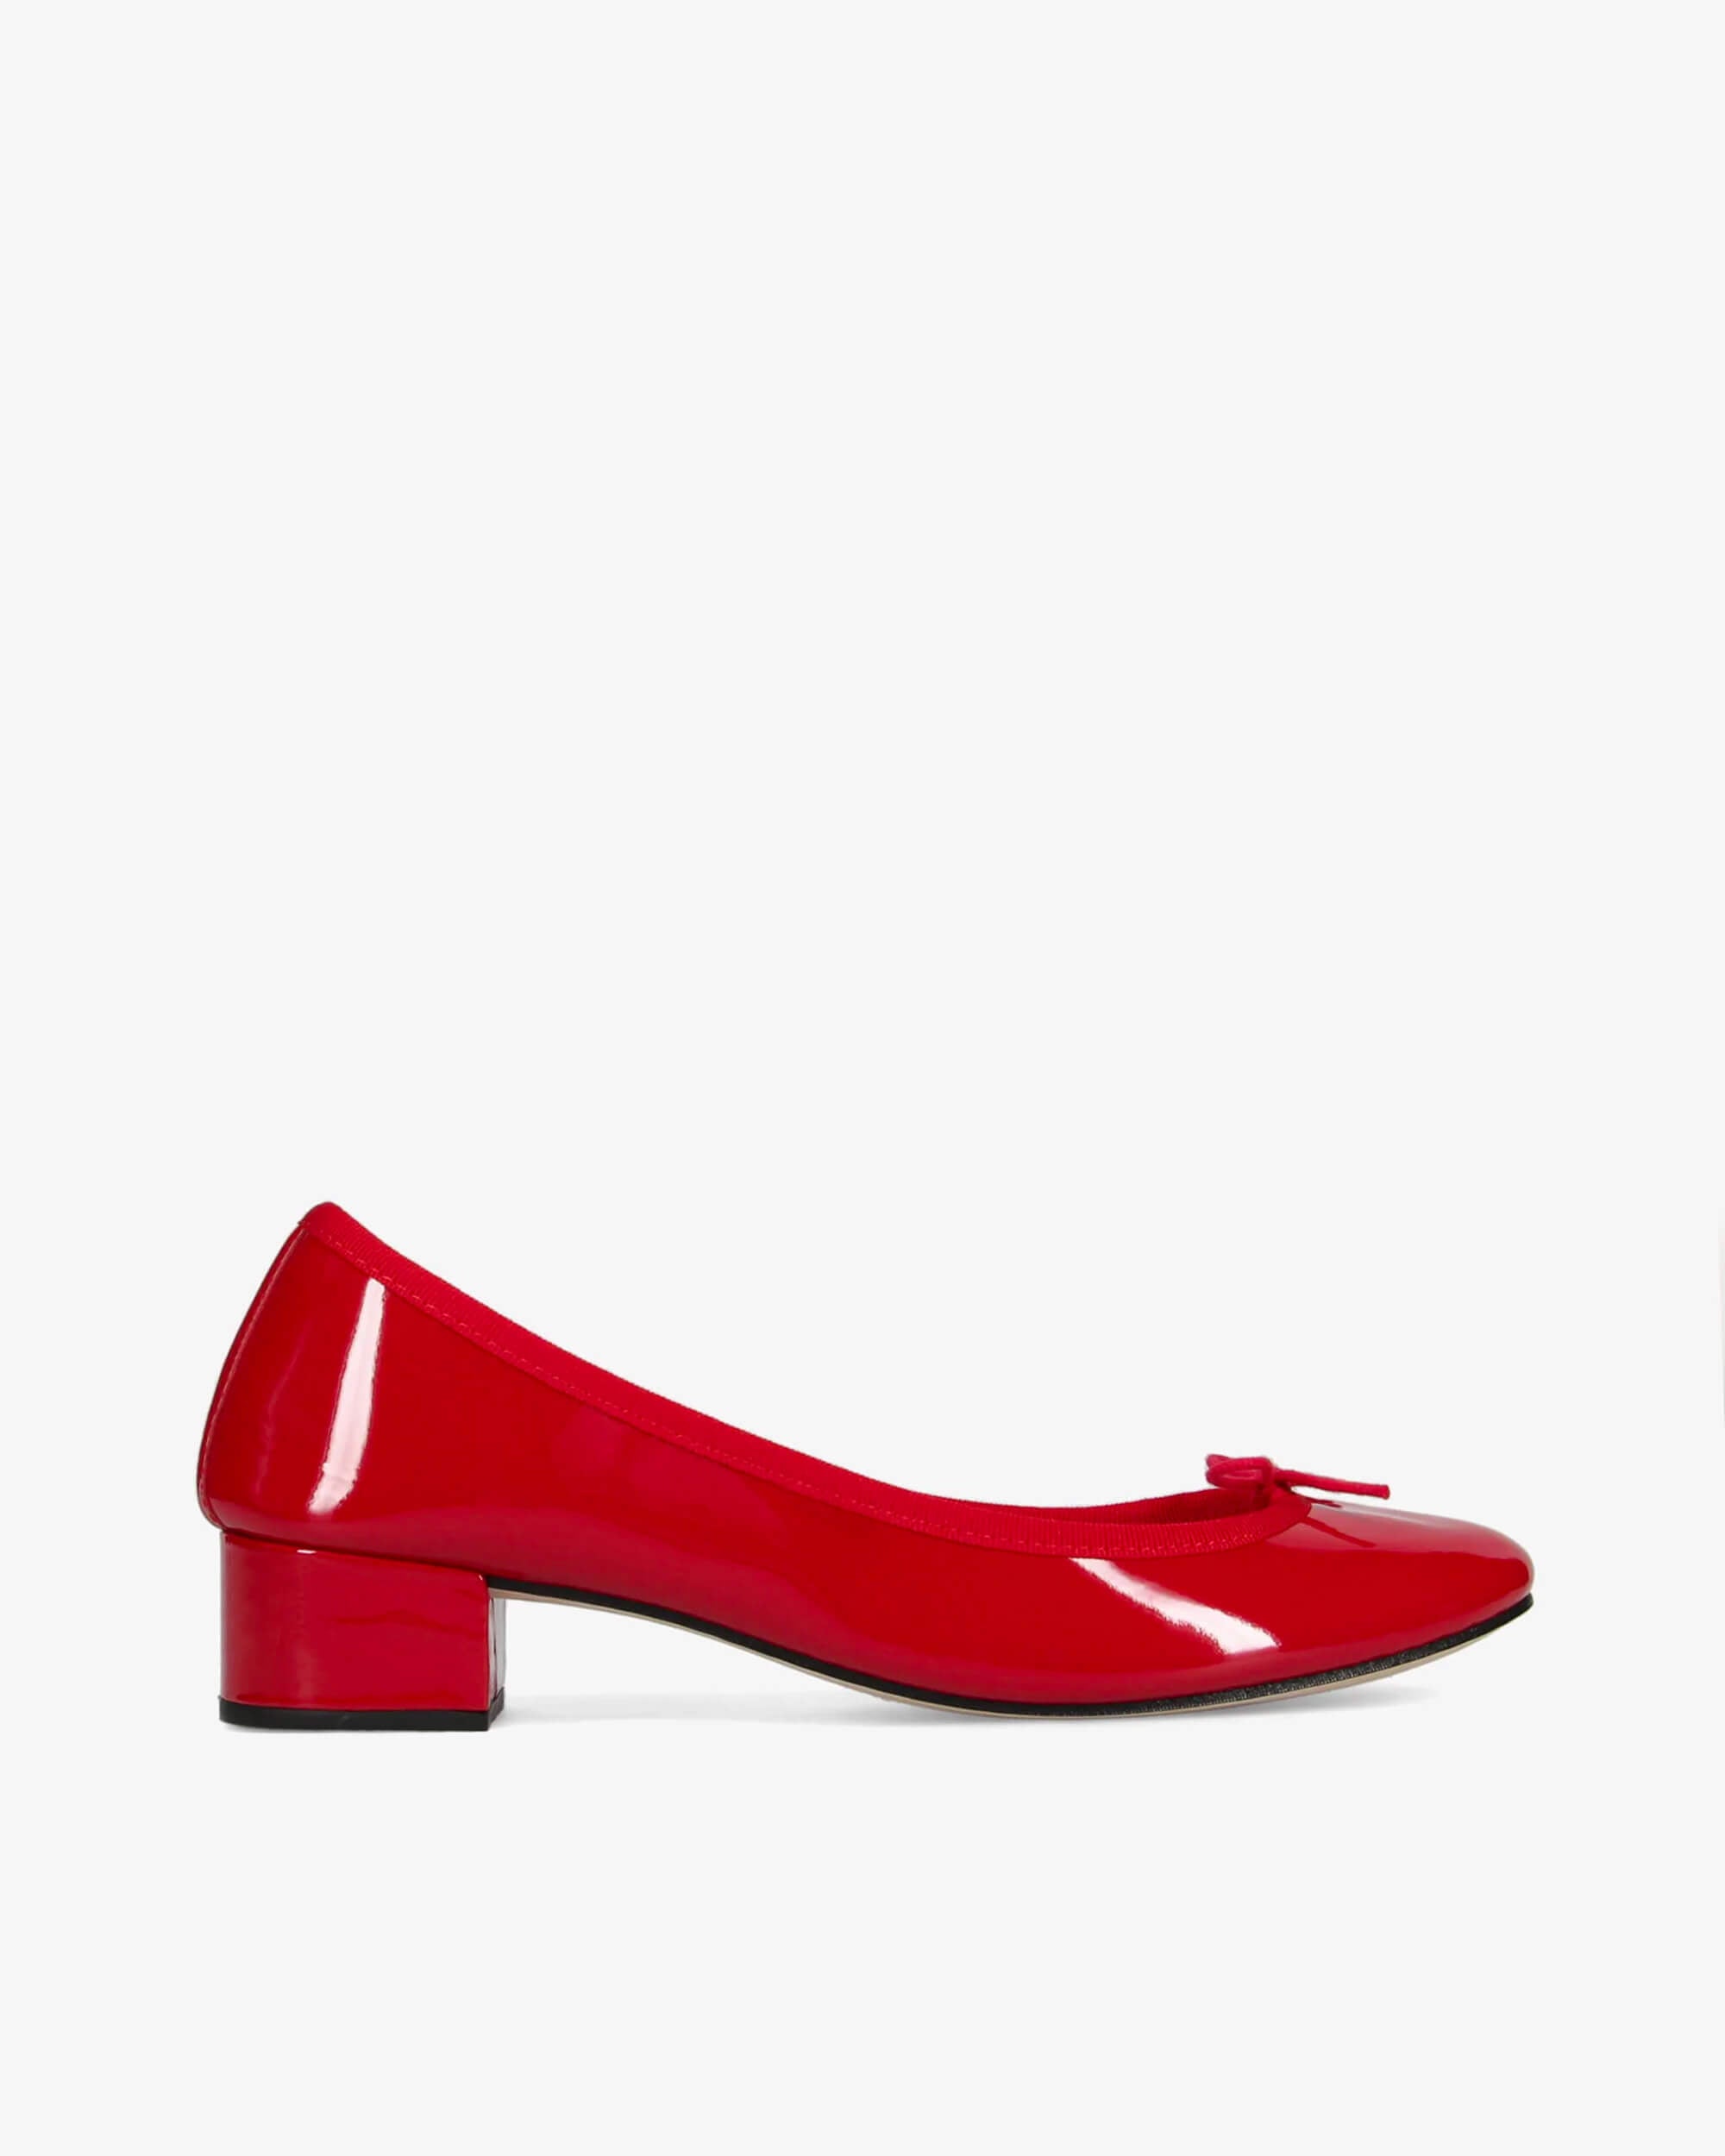 Repetto Camille REDサイズ37 - 靴